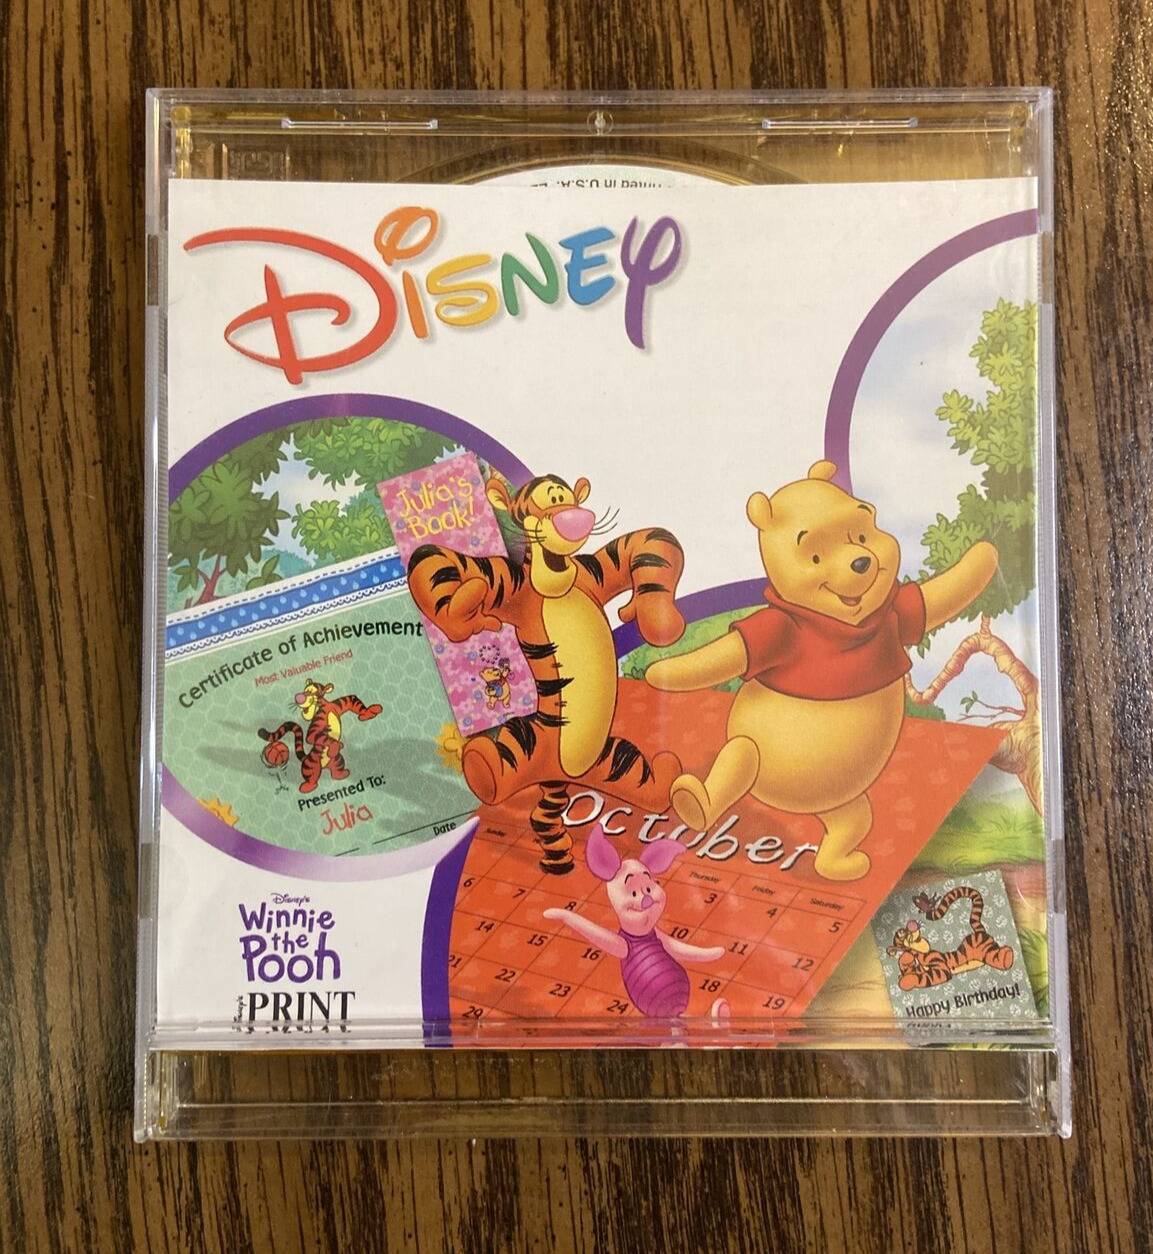 Disney's Winnie the Pooh Print Studio for Windows 95 CD Rom  1997